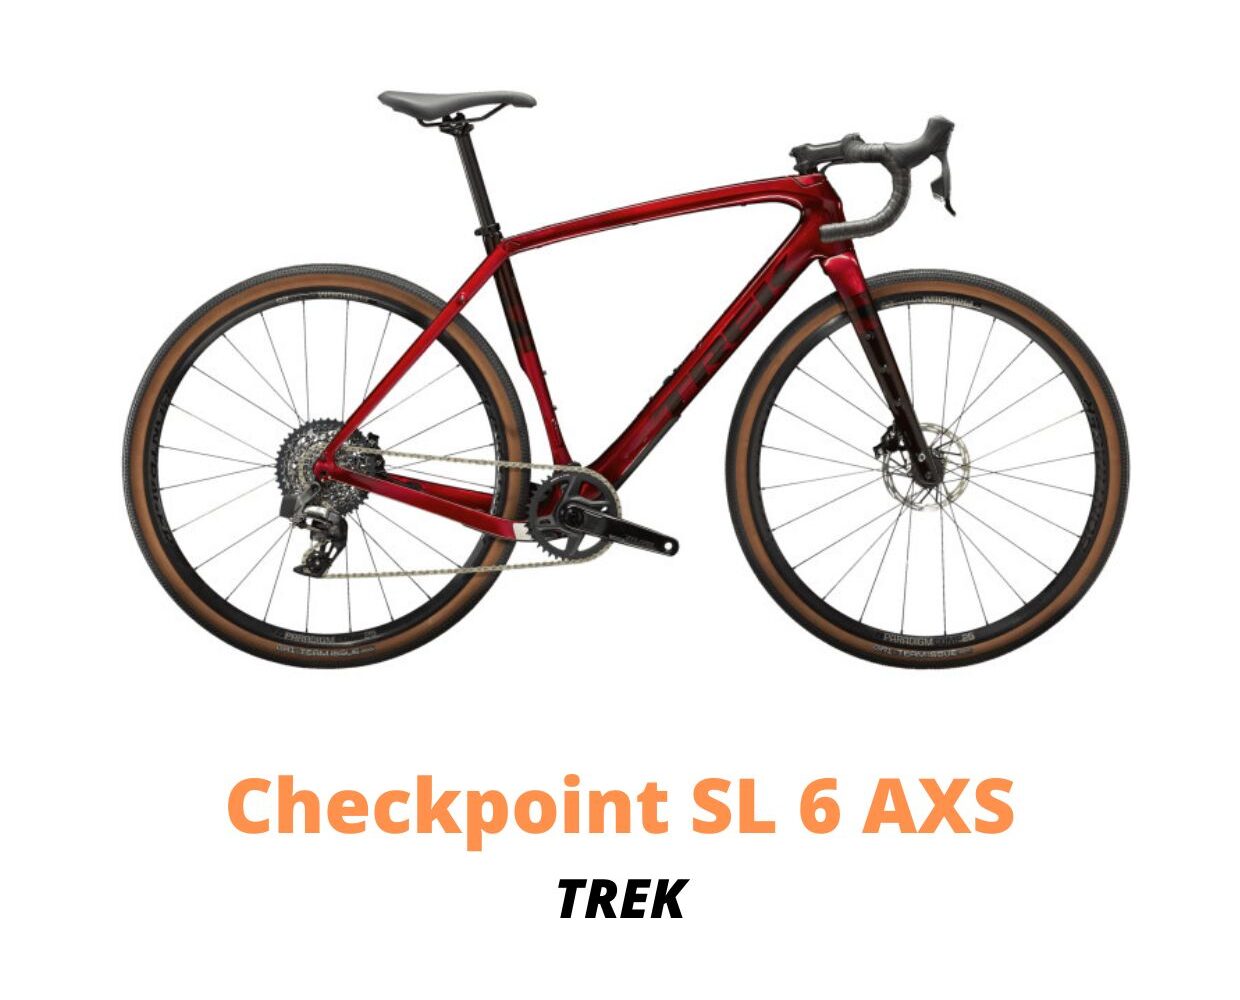 Checkpoint SL 6 AXS